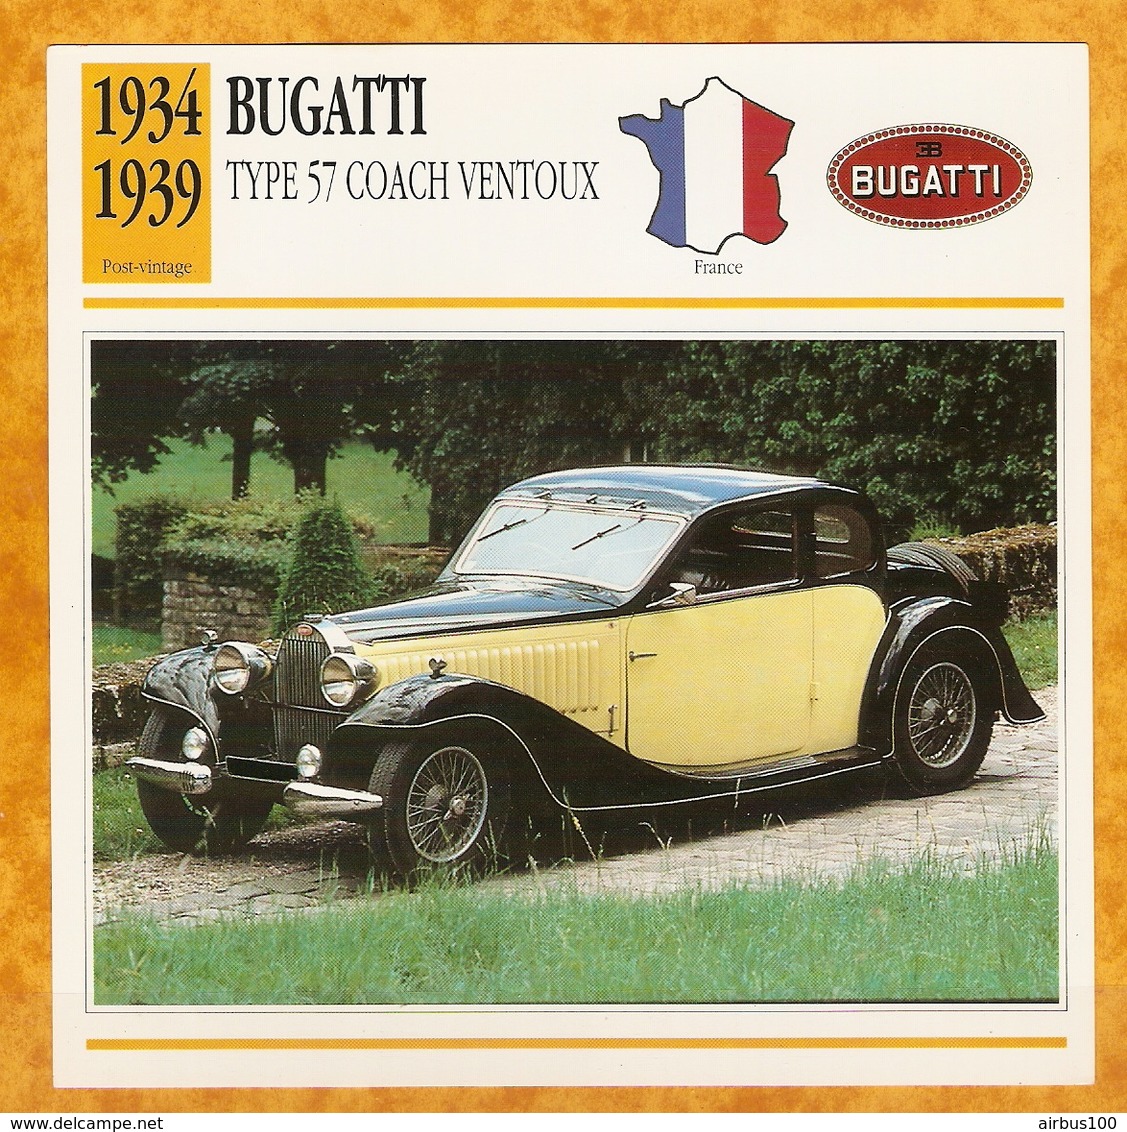 1934 FRANCE VIEILLE VOITURE BUGATTI TYPE 57 COACH VENTOUX - FRANCE OLD CAR - FRANCIA VIEJO COCHE - VECCHIA MACCHINA - Automobili